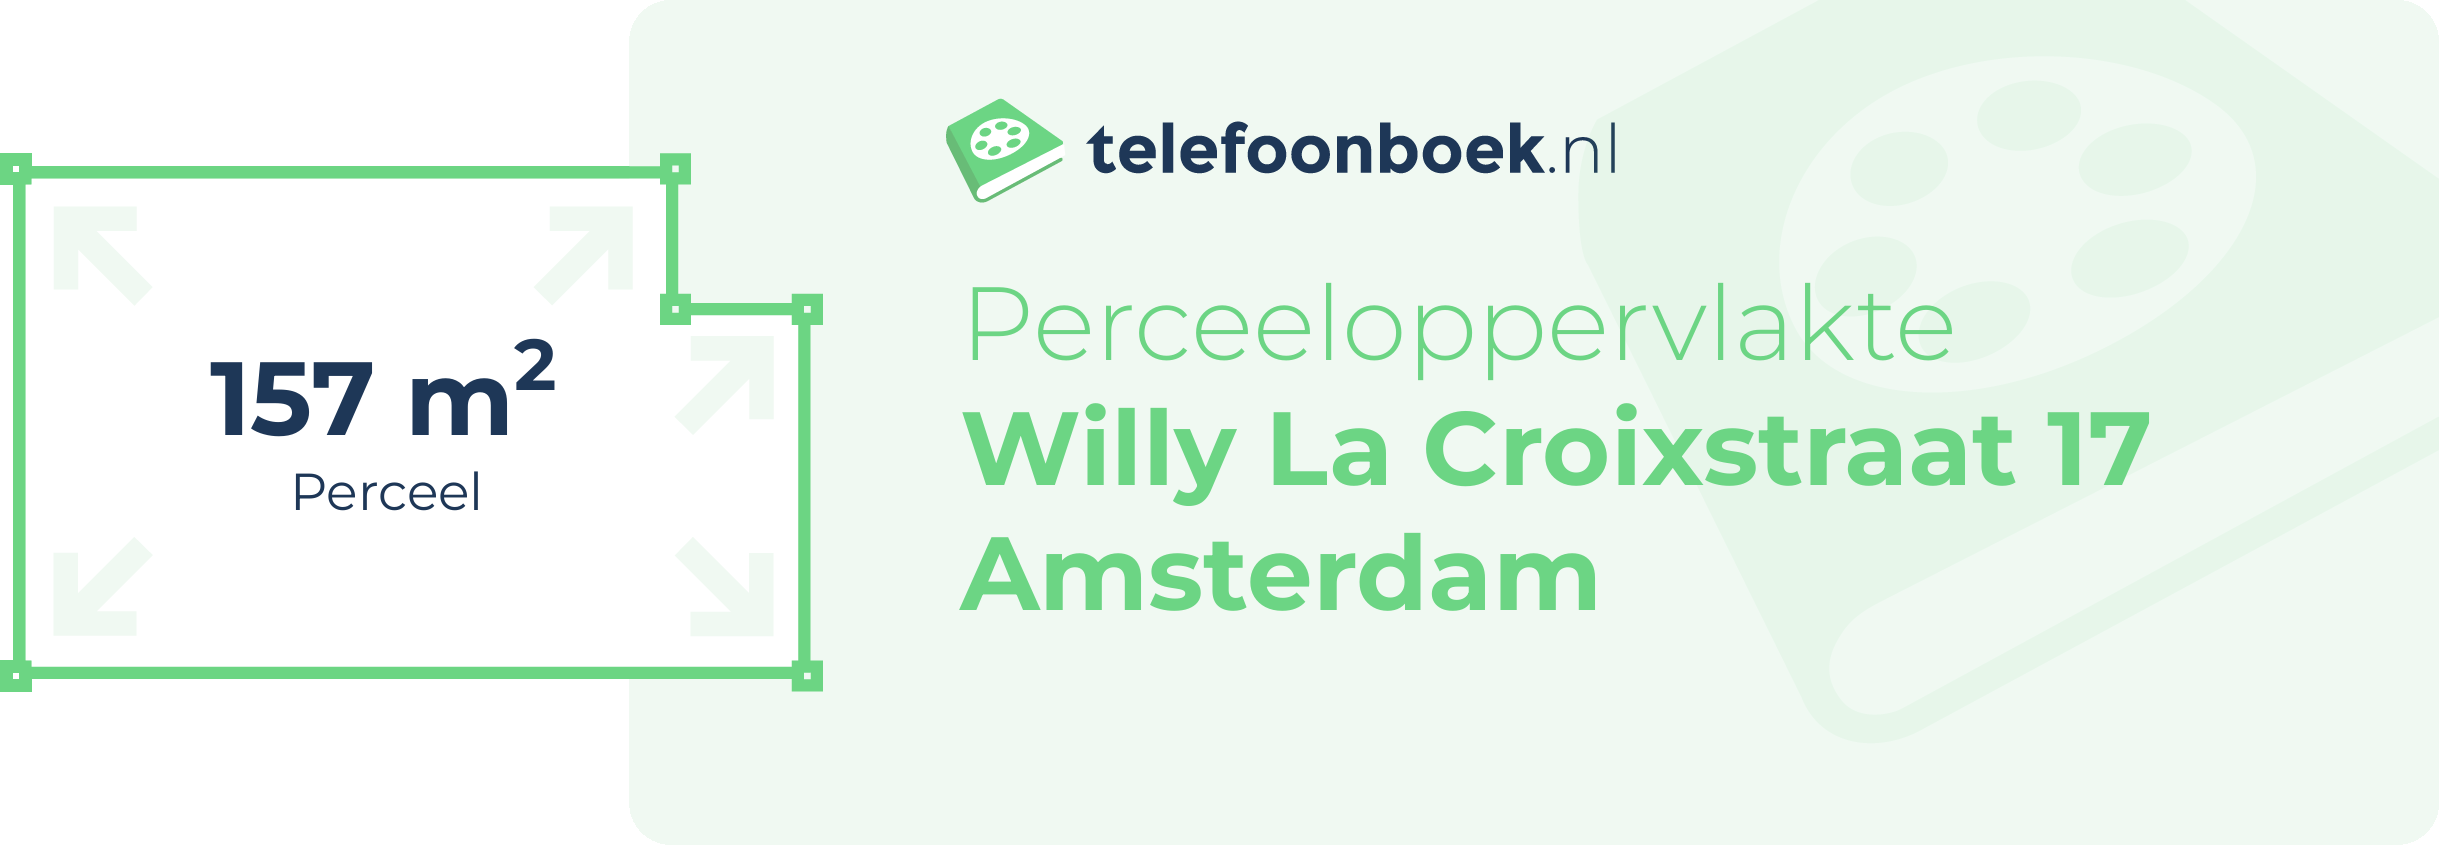 Perceeloppervlakte Willy La Croixstraat 17 Amsterdam